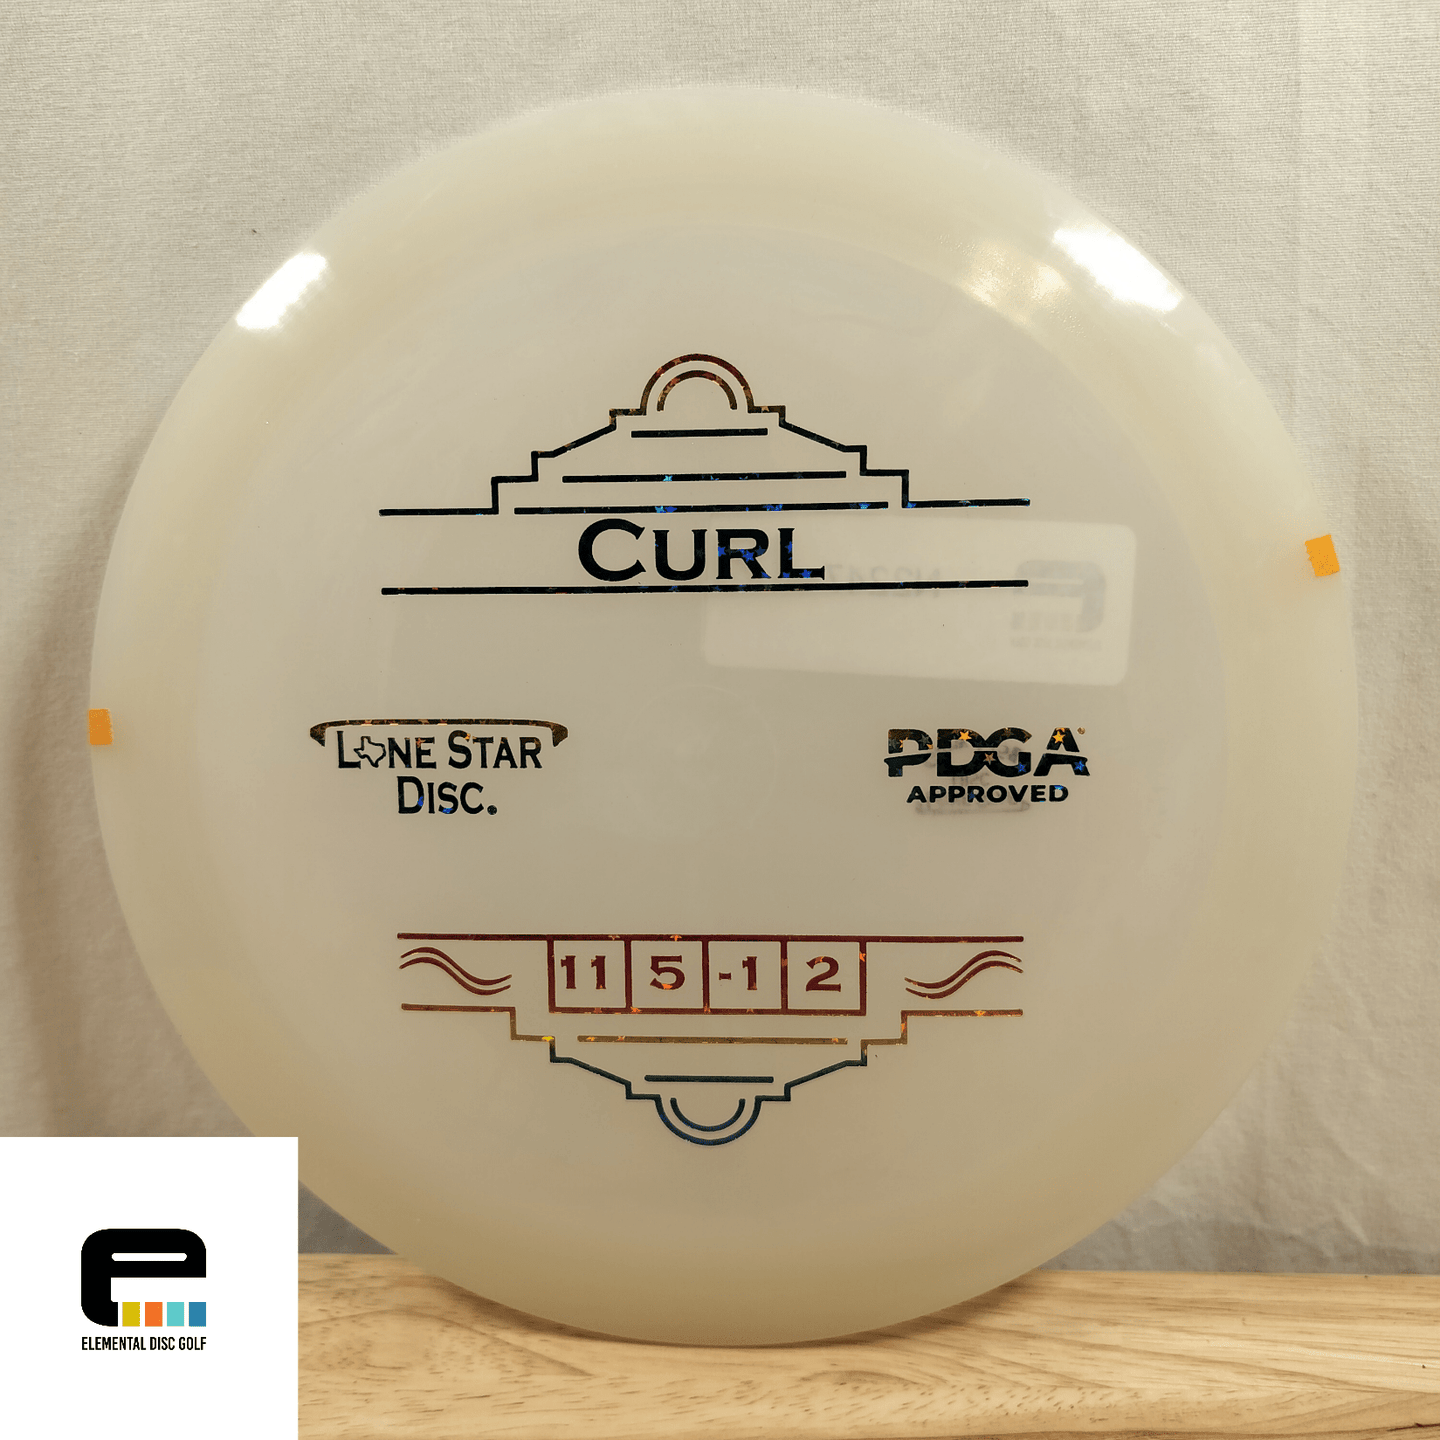 Lone Star Glow Curl - Elemental Disc Golf